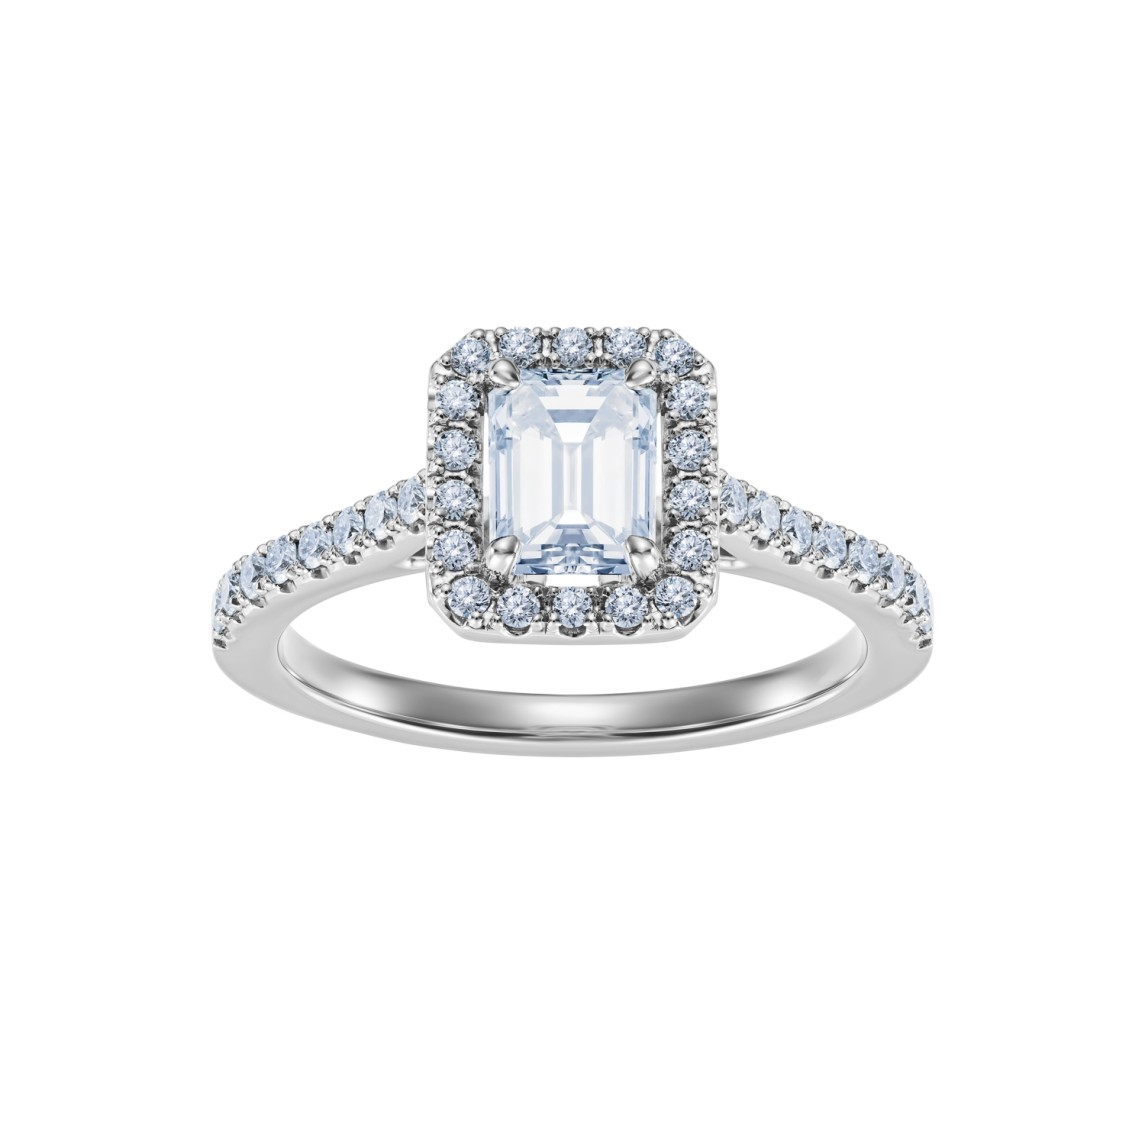 White Gold Emerald-Cut Diamond Ring 